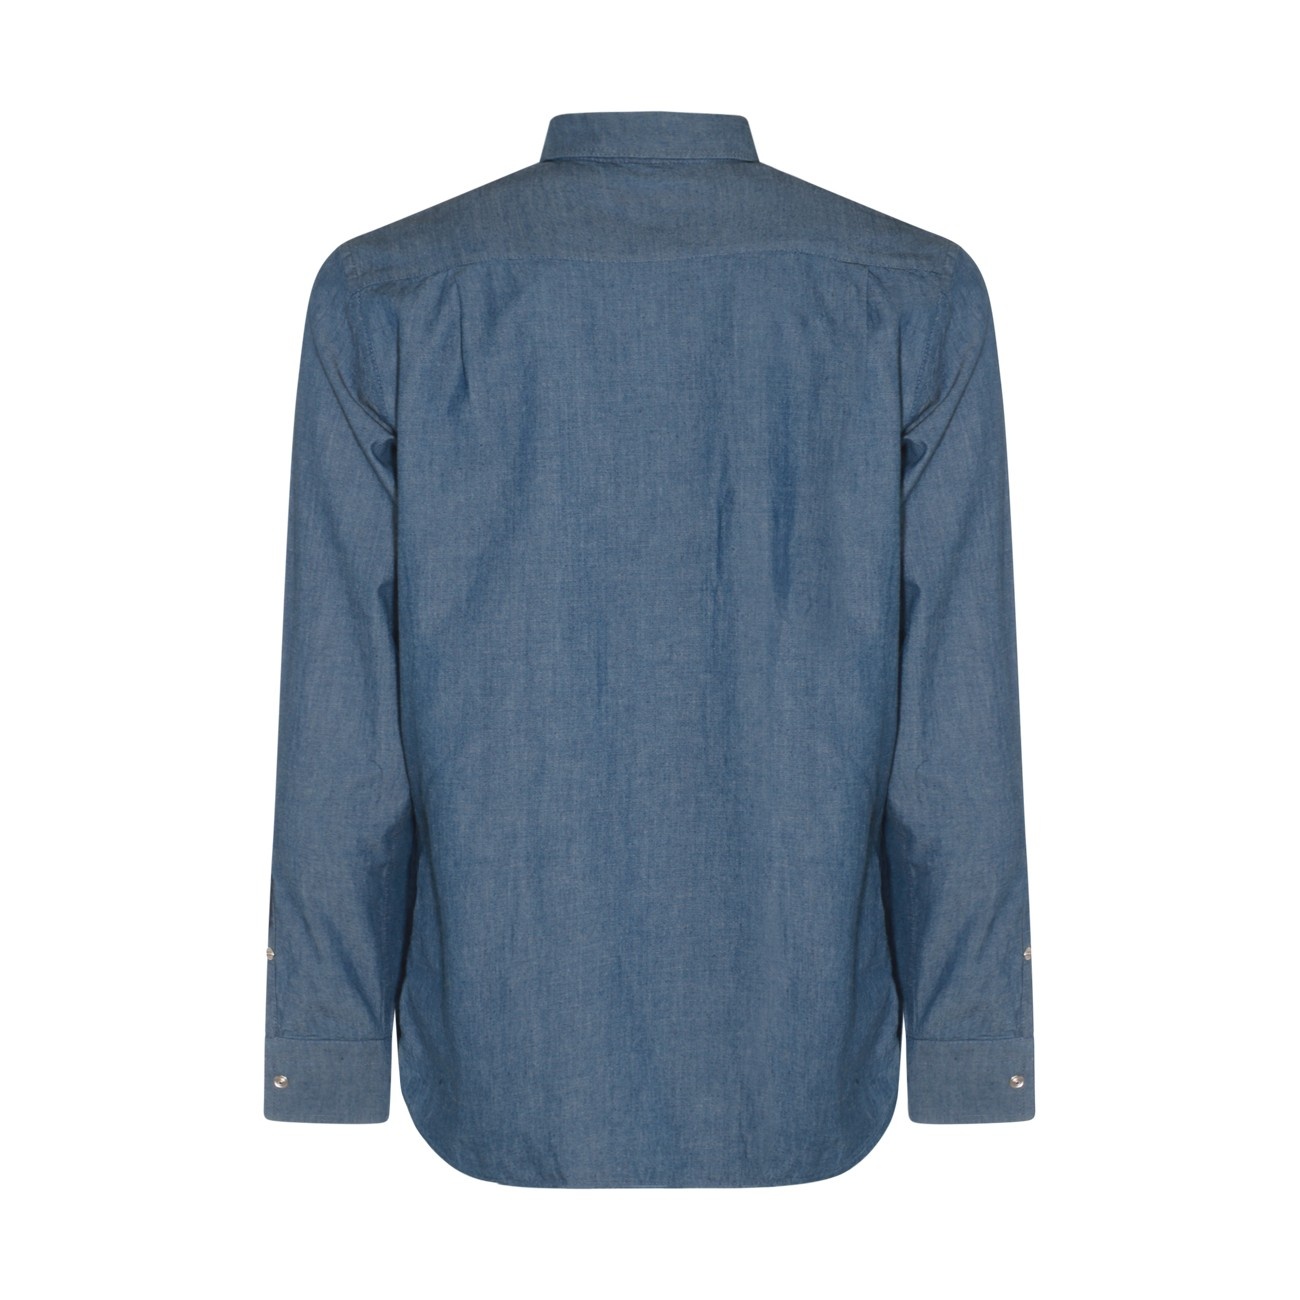 blue cotton shirt - 2